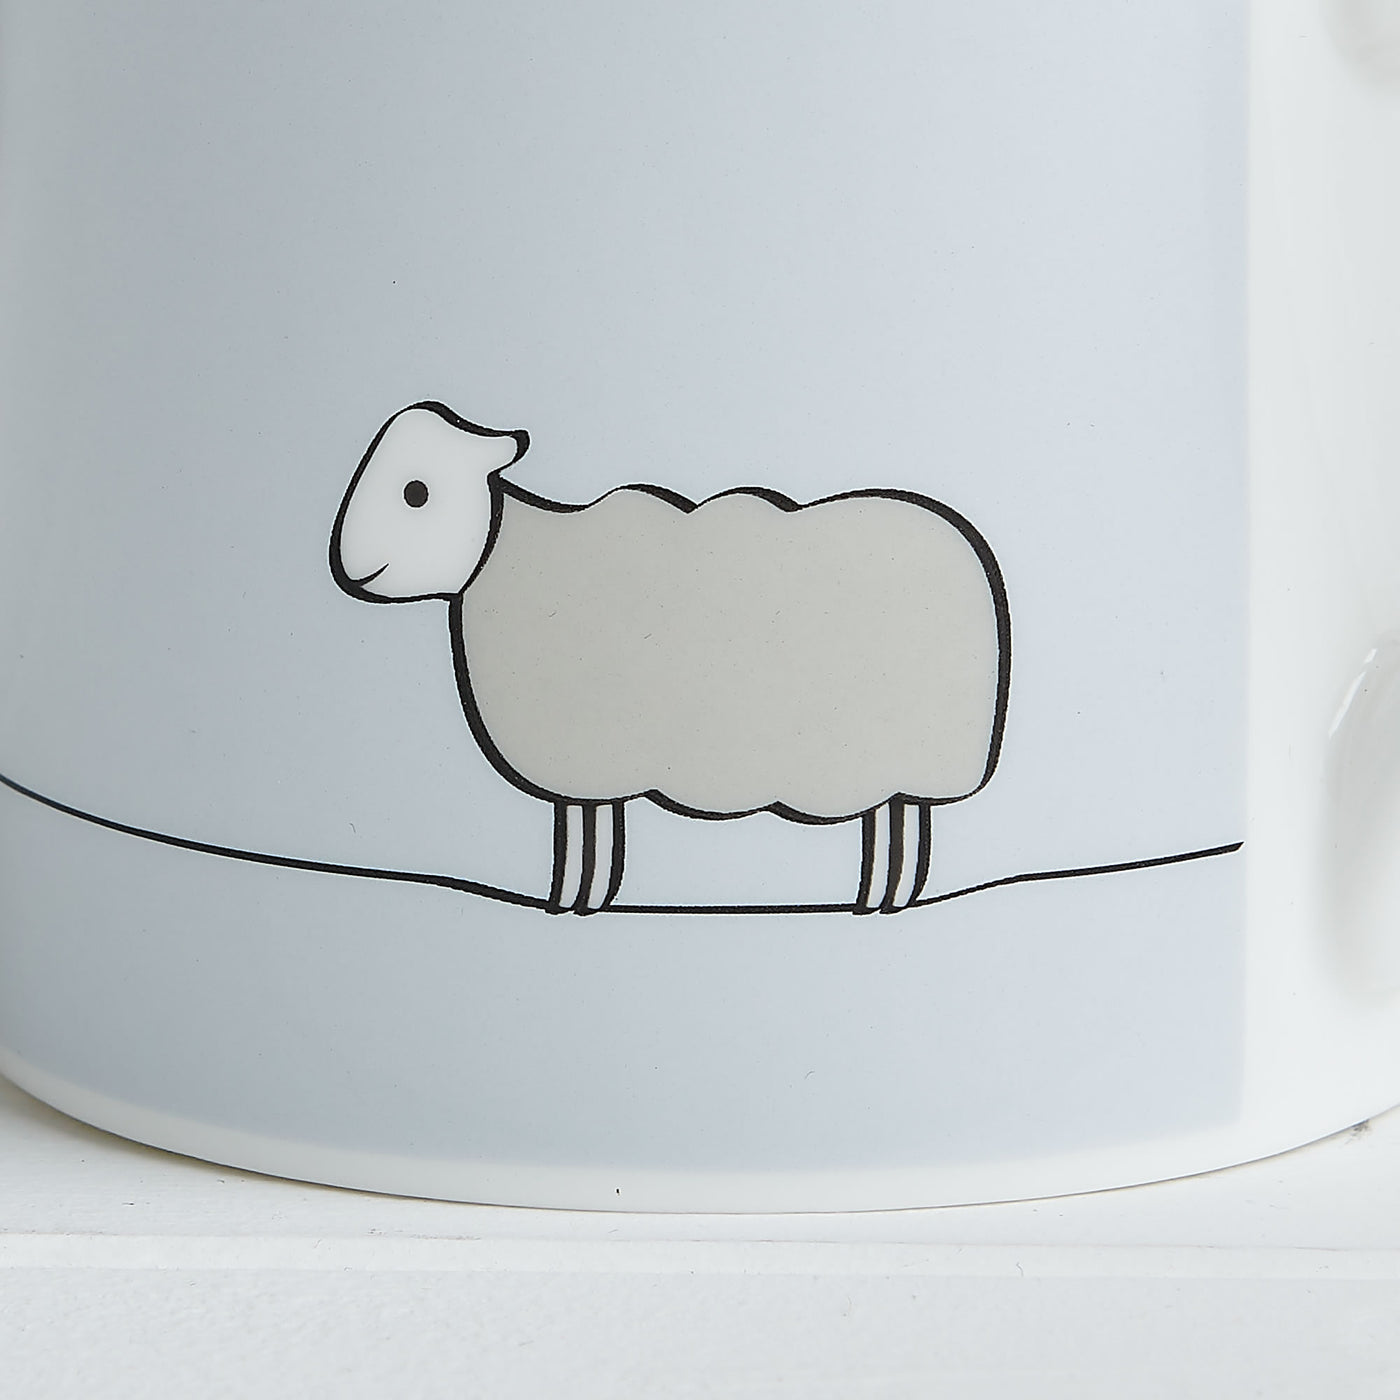 Sheep Lover Gift Set